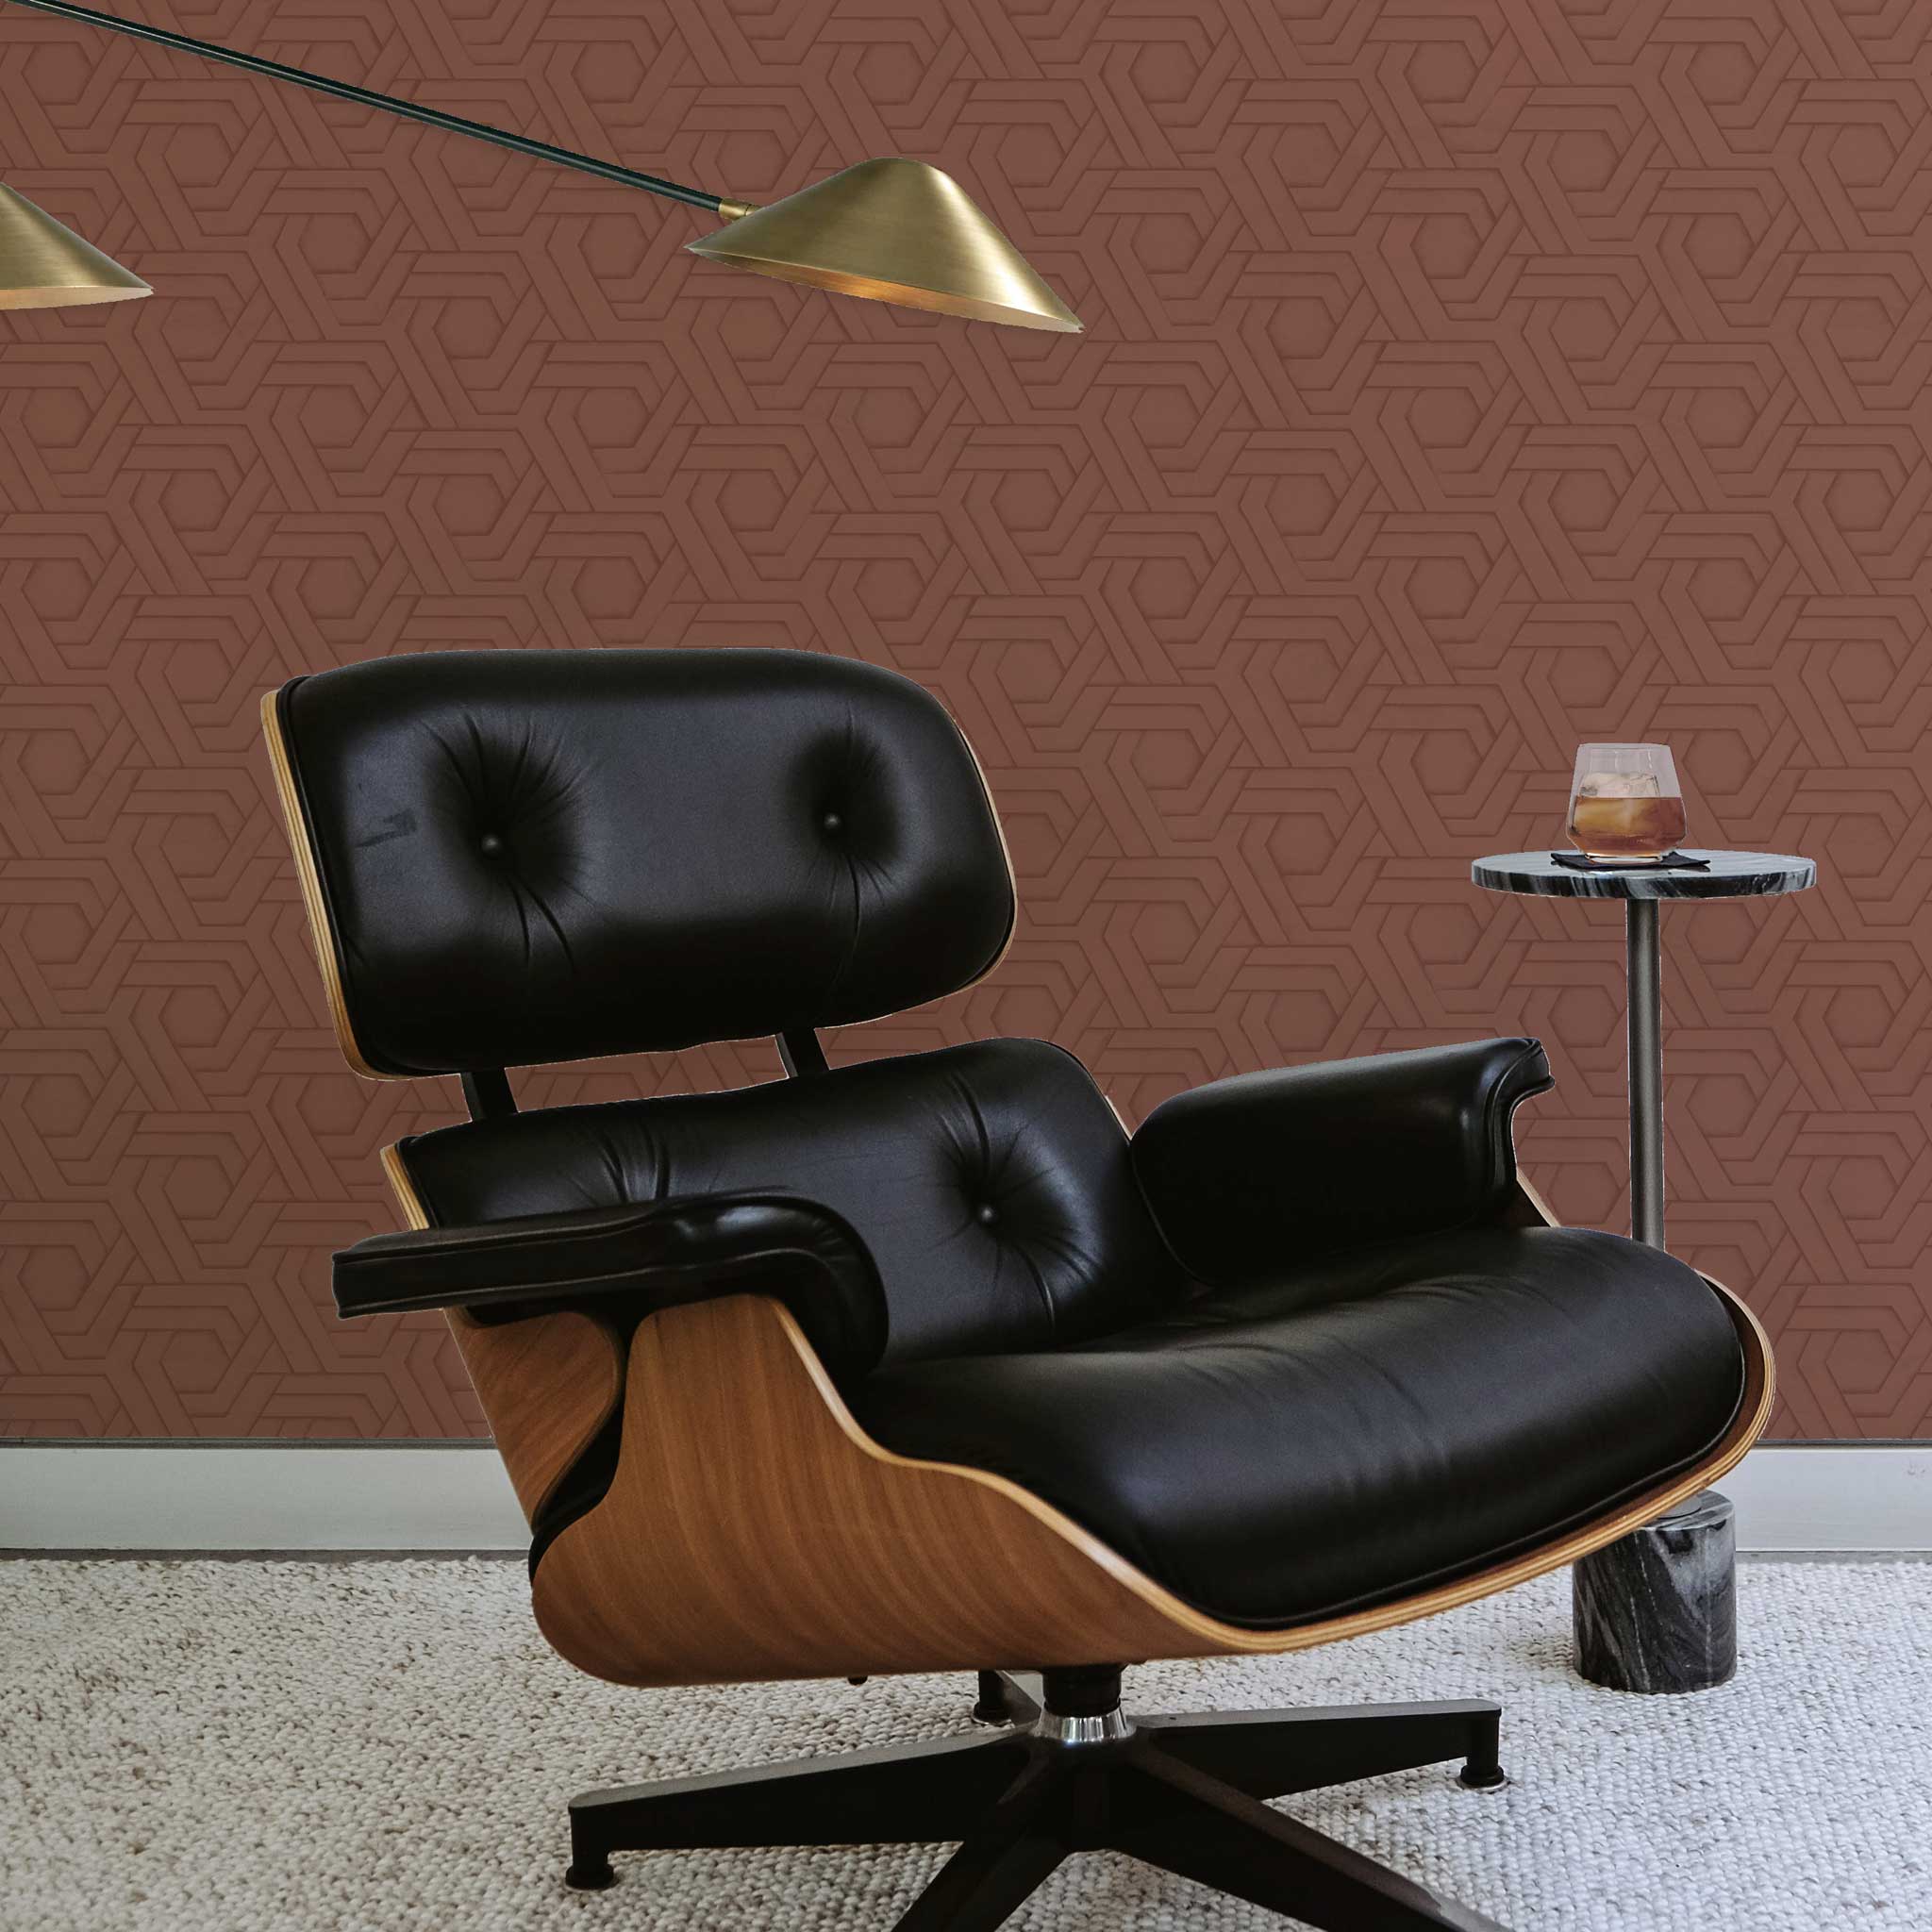 Habita wallpaper design - rust Hix pattern in home office